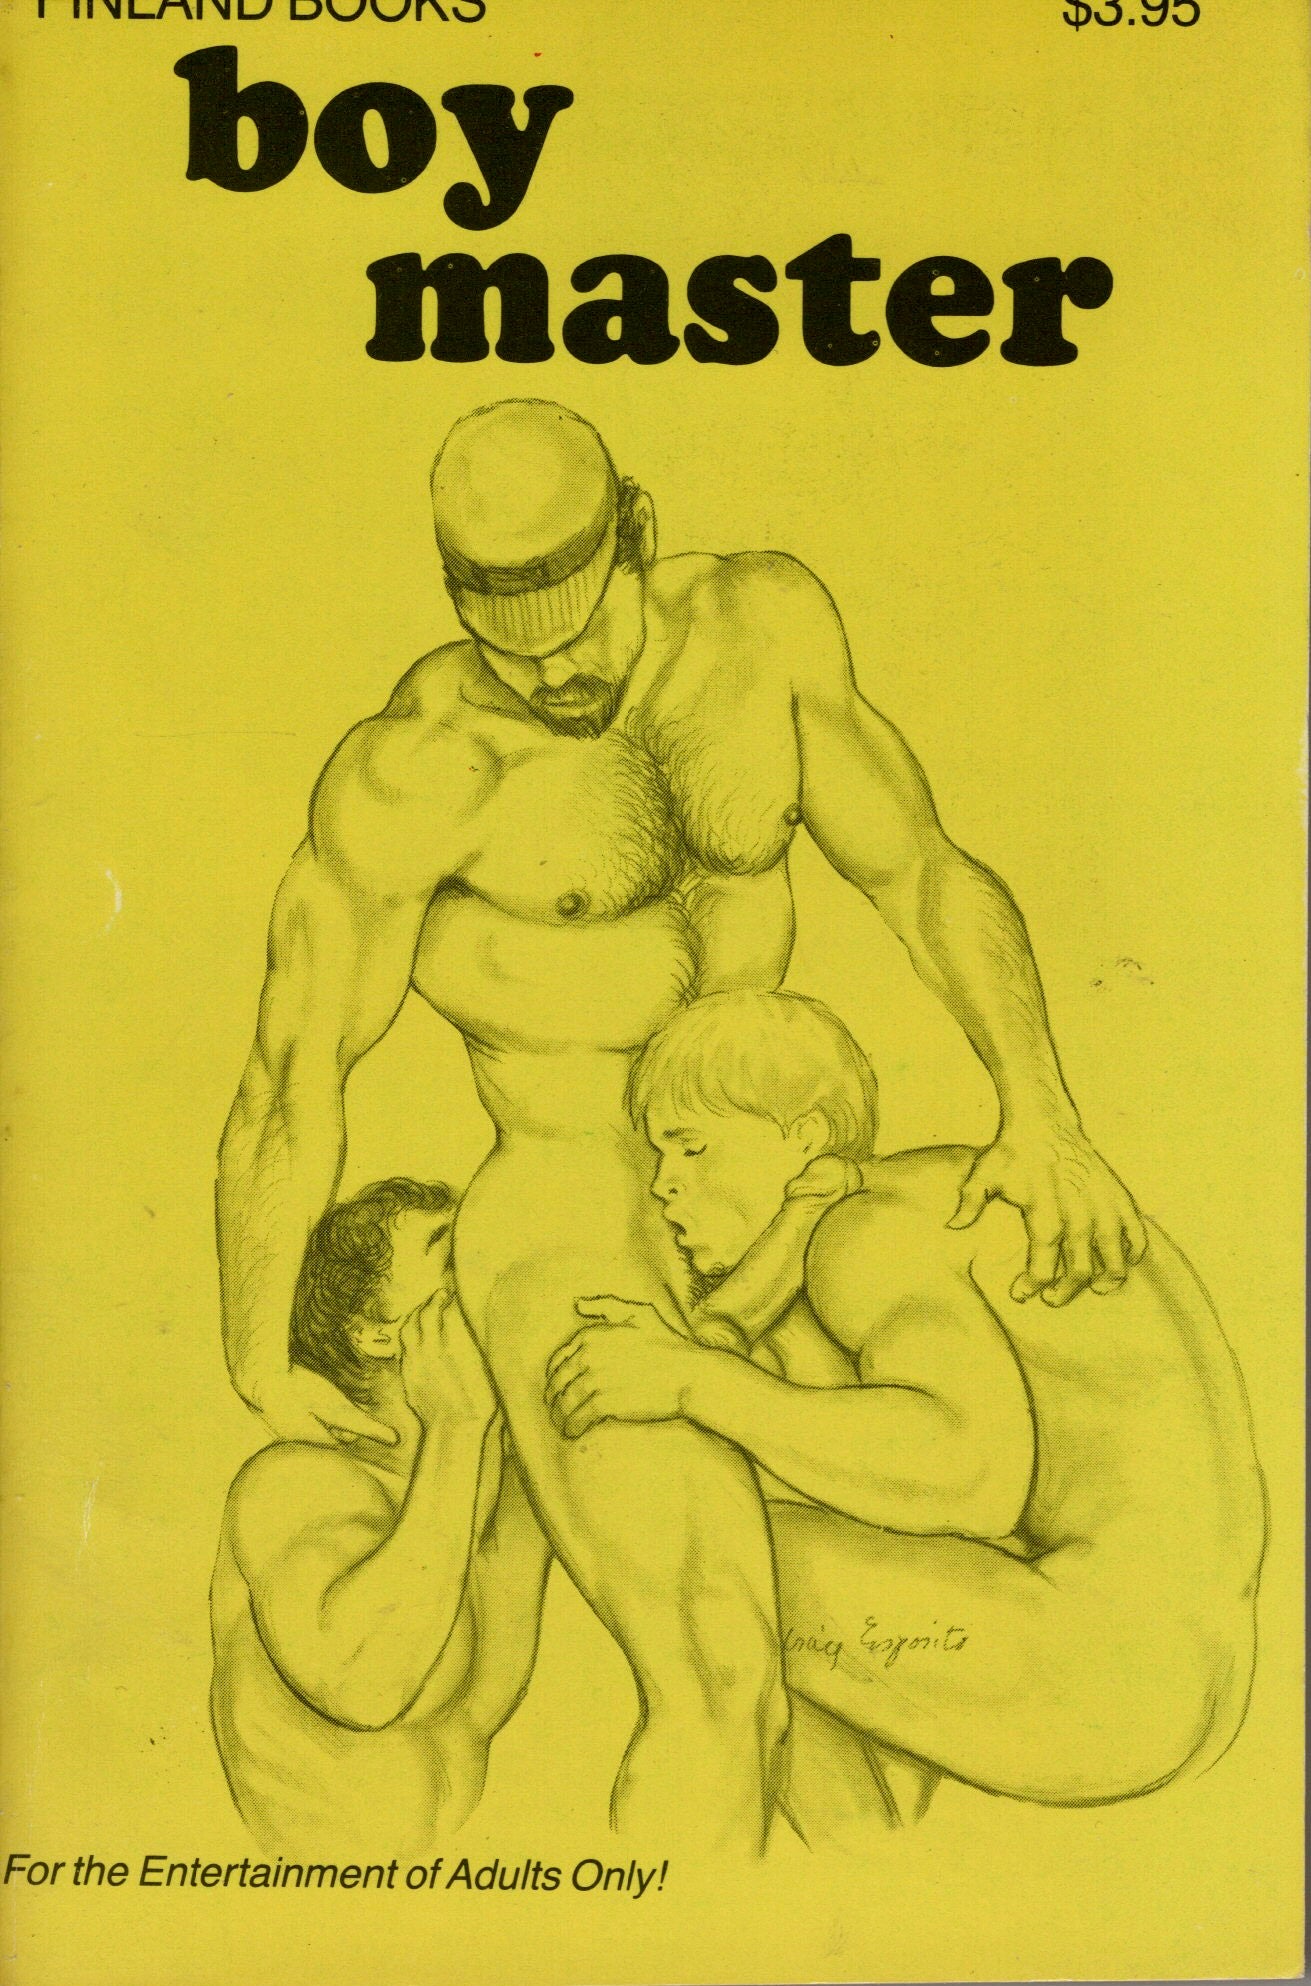 1988 Boy Master by, Finland Books FIN-149